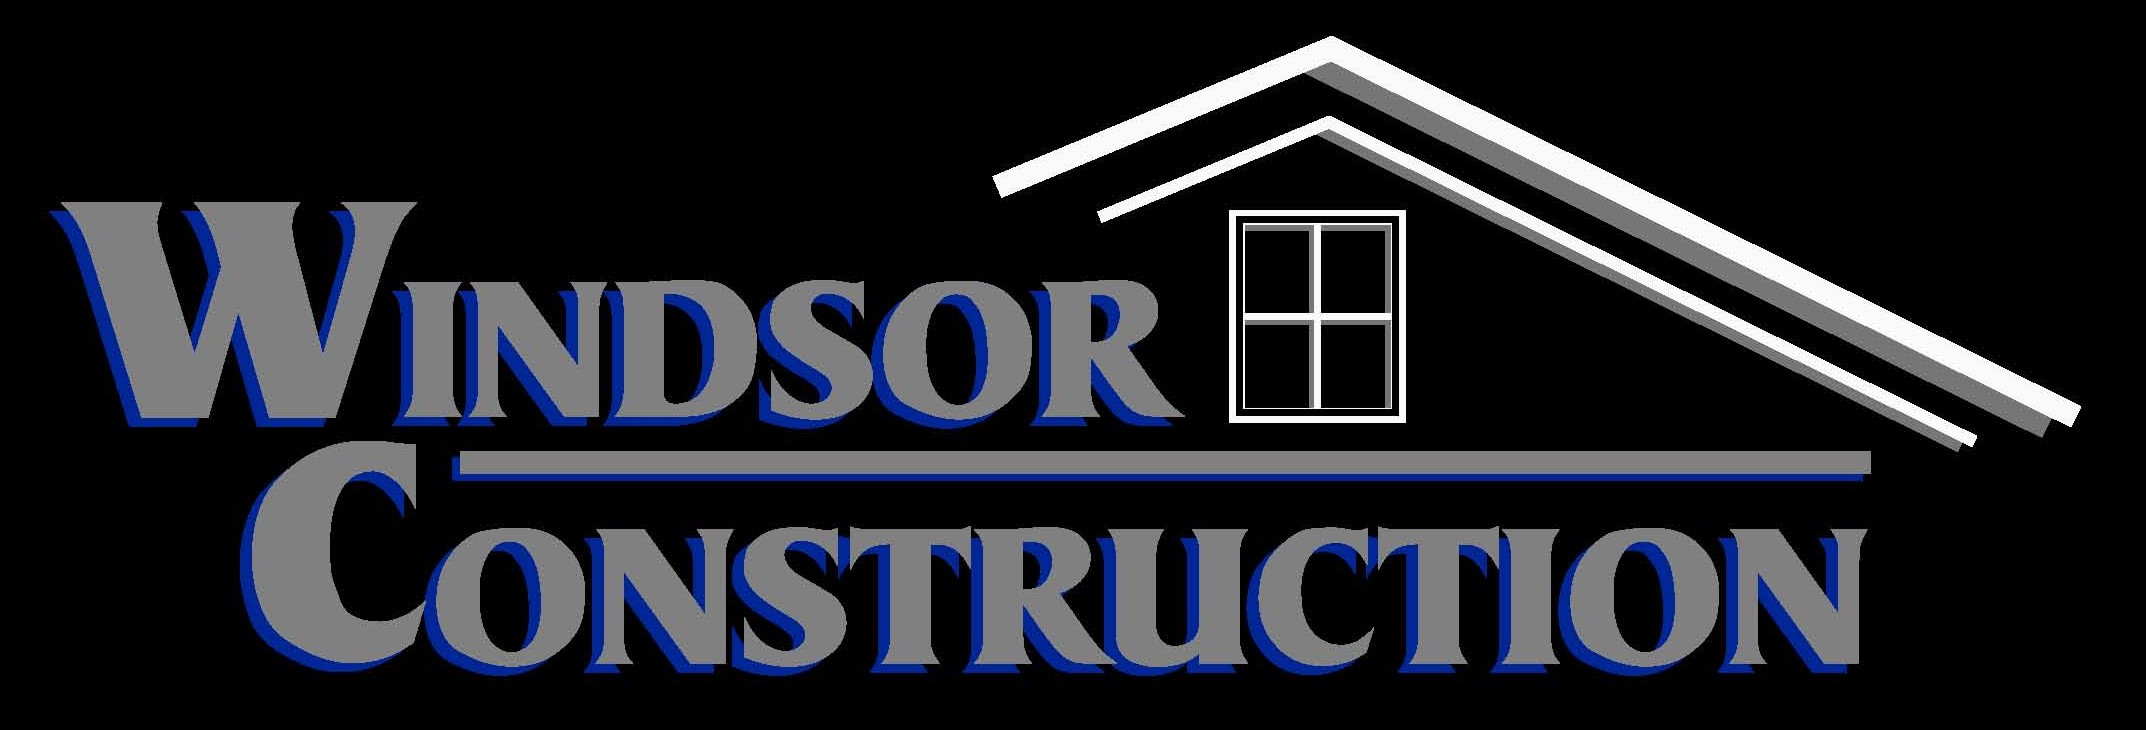 windsor_construction_logo